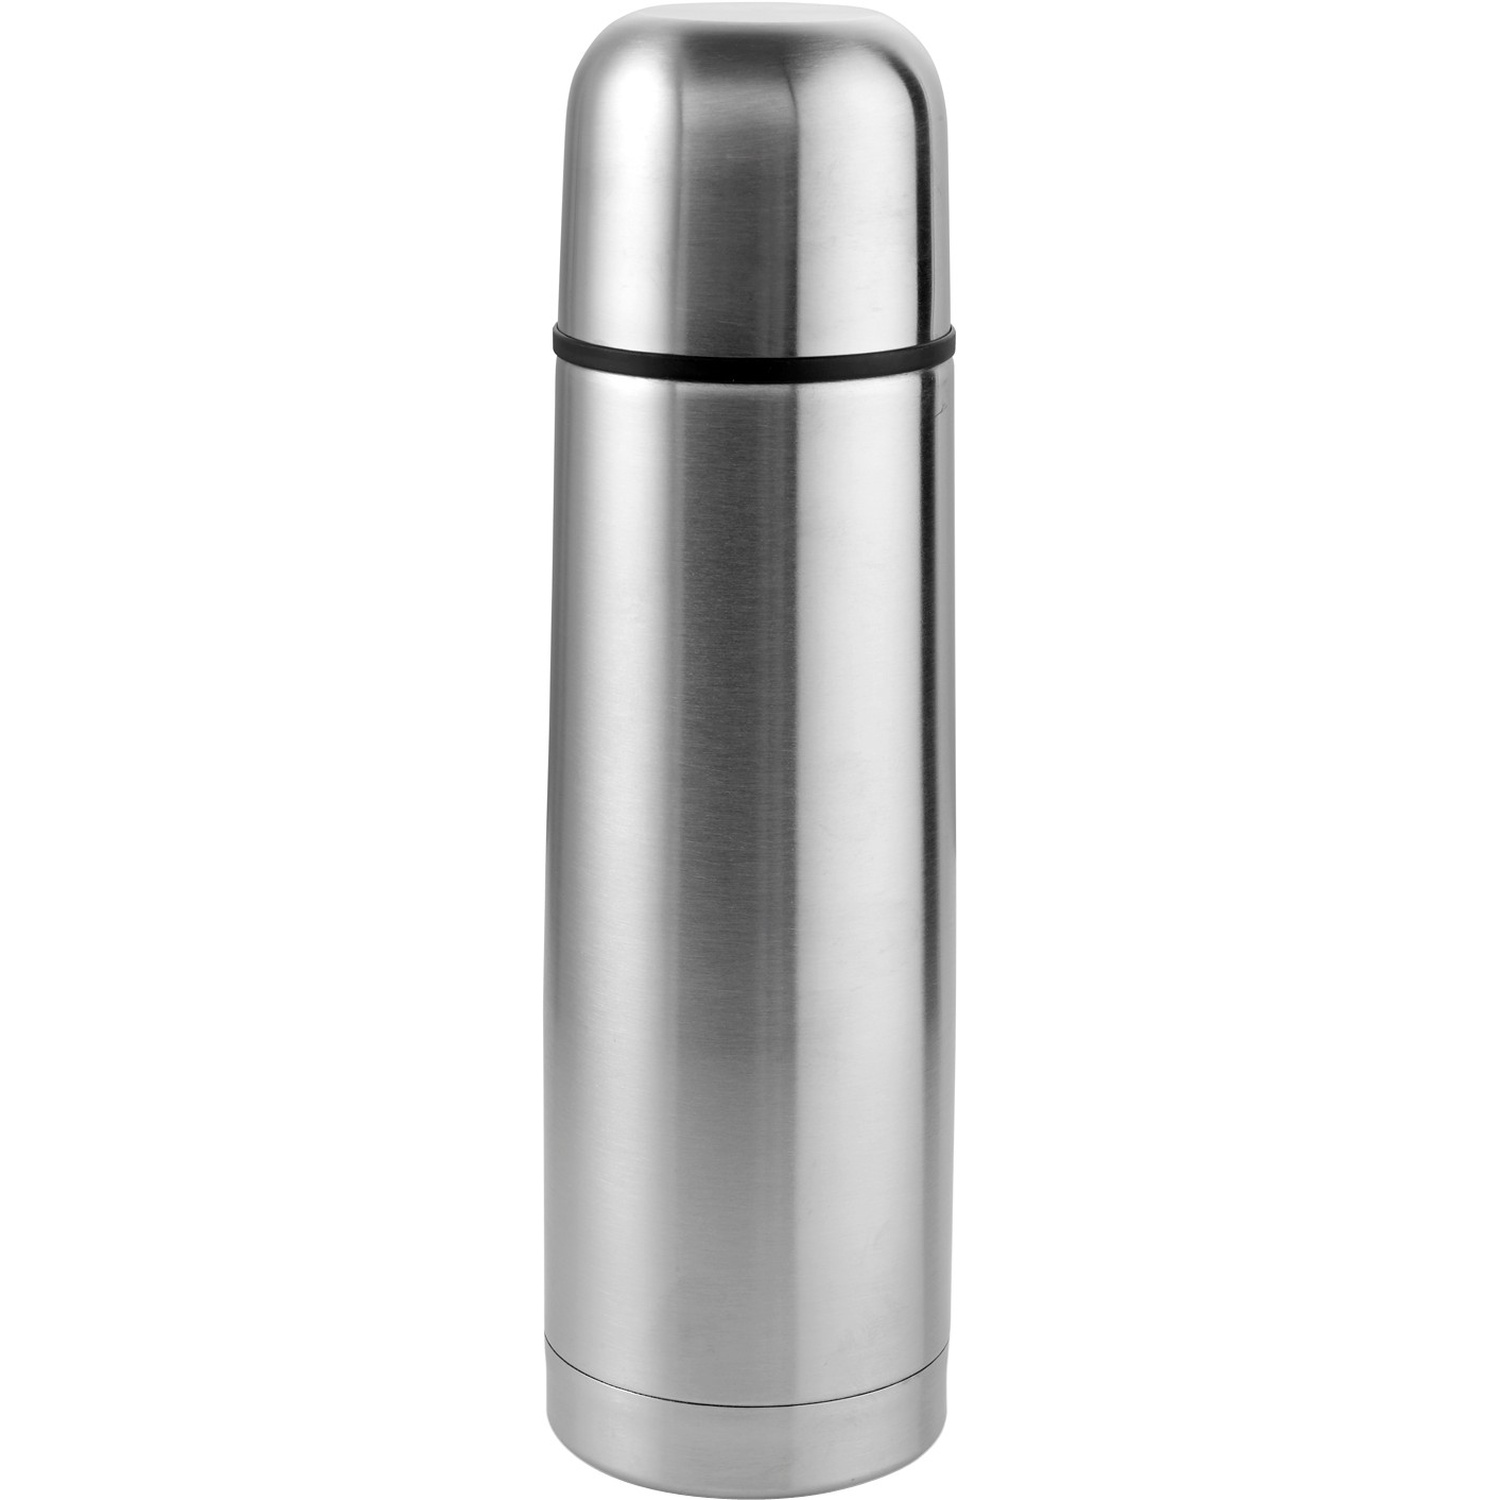 004659 005999999 3d090 frt pro01 fal - Vacuum flask (750ml)